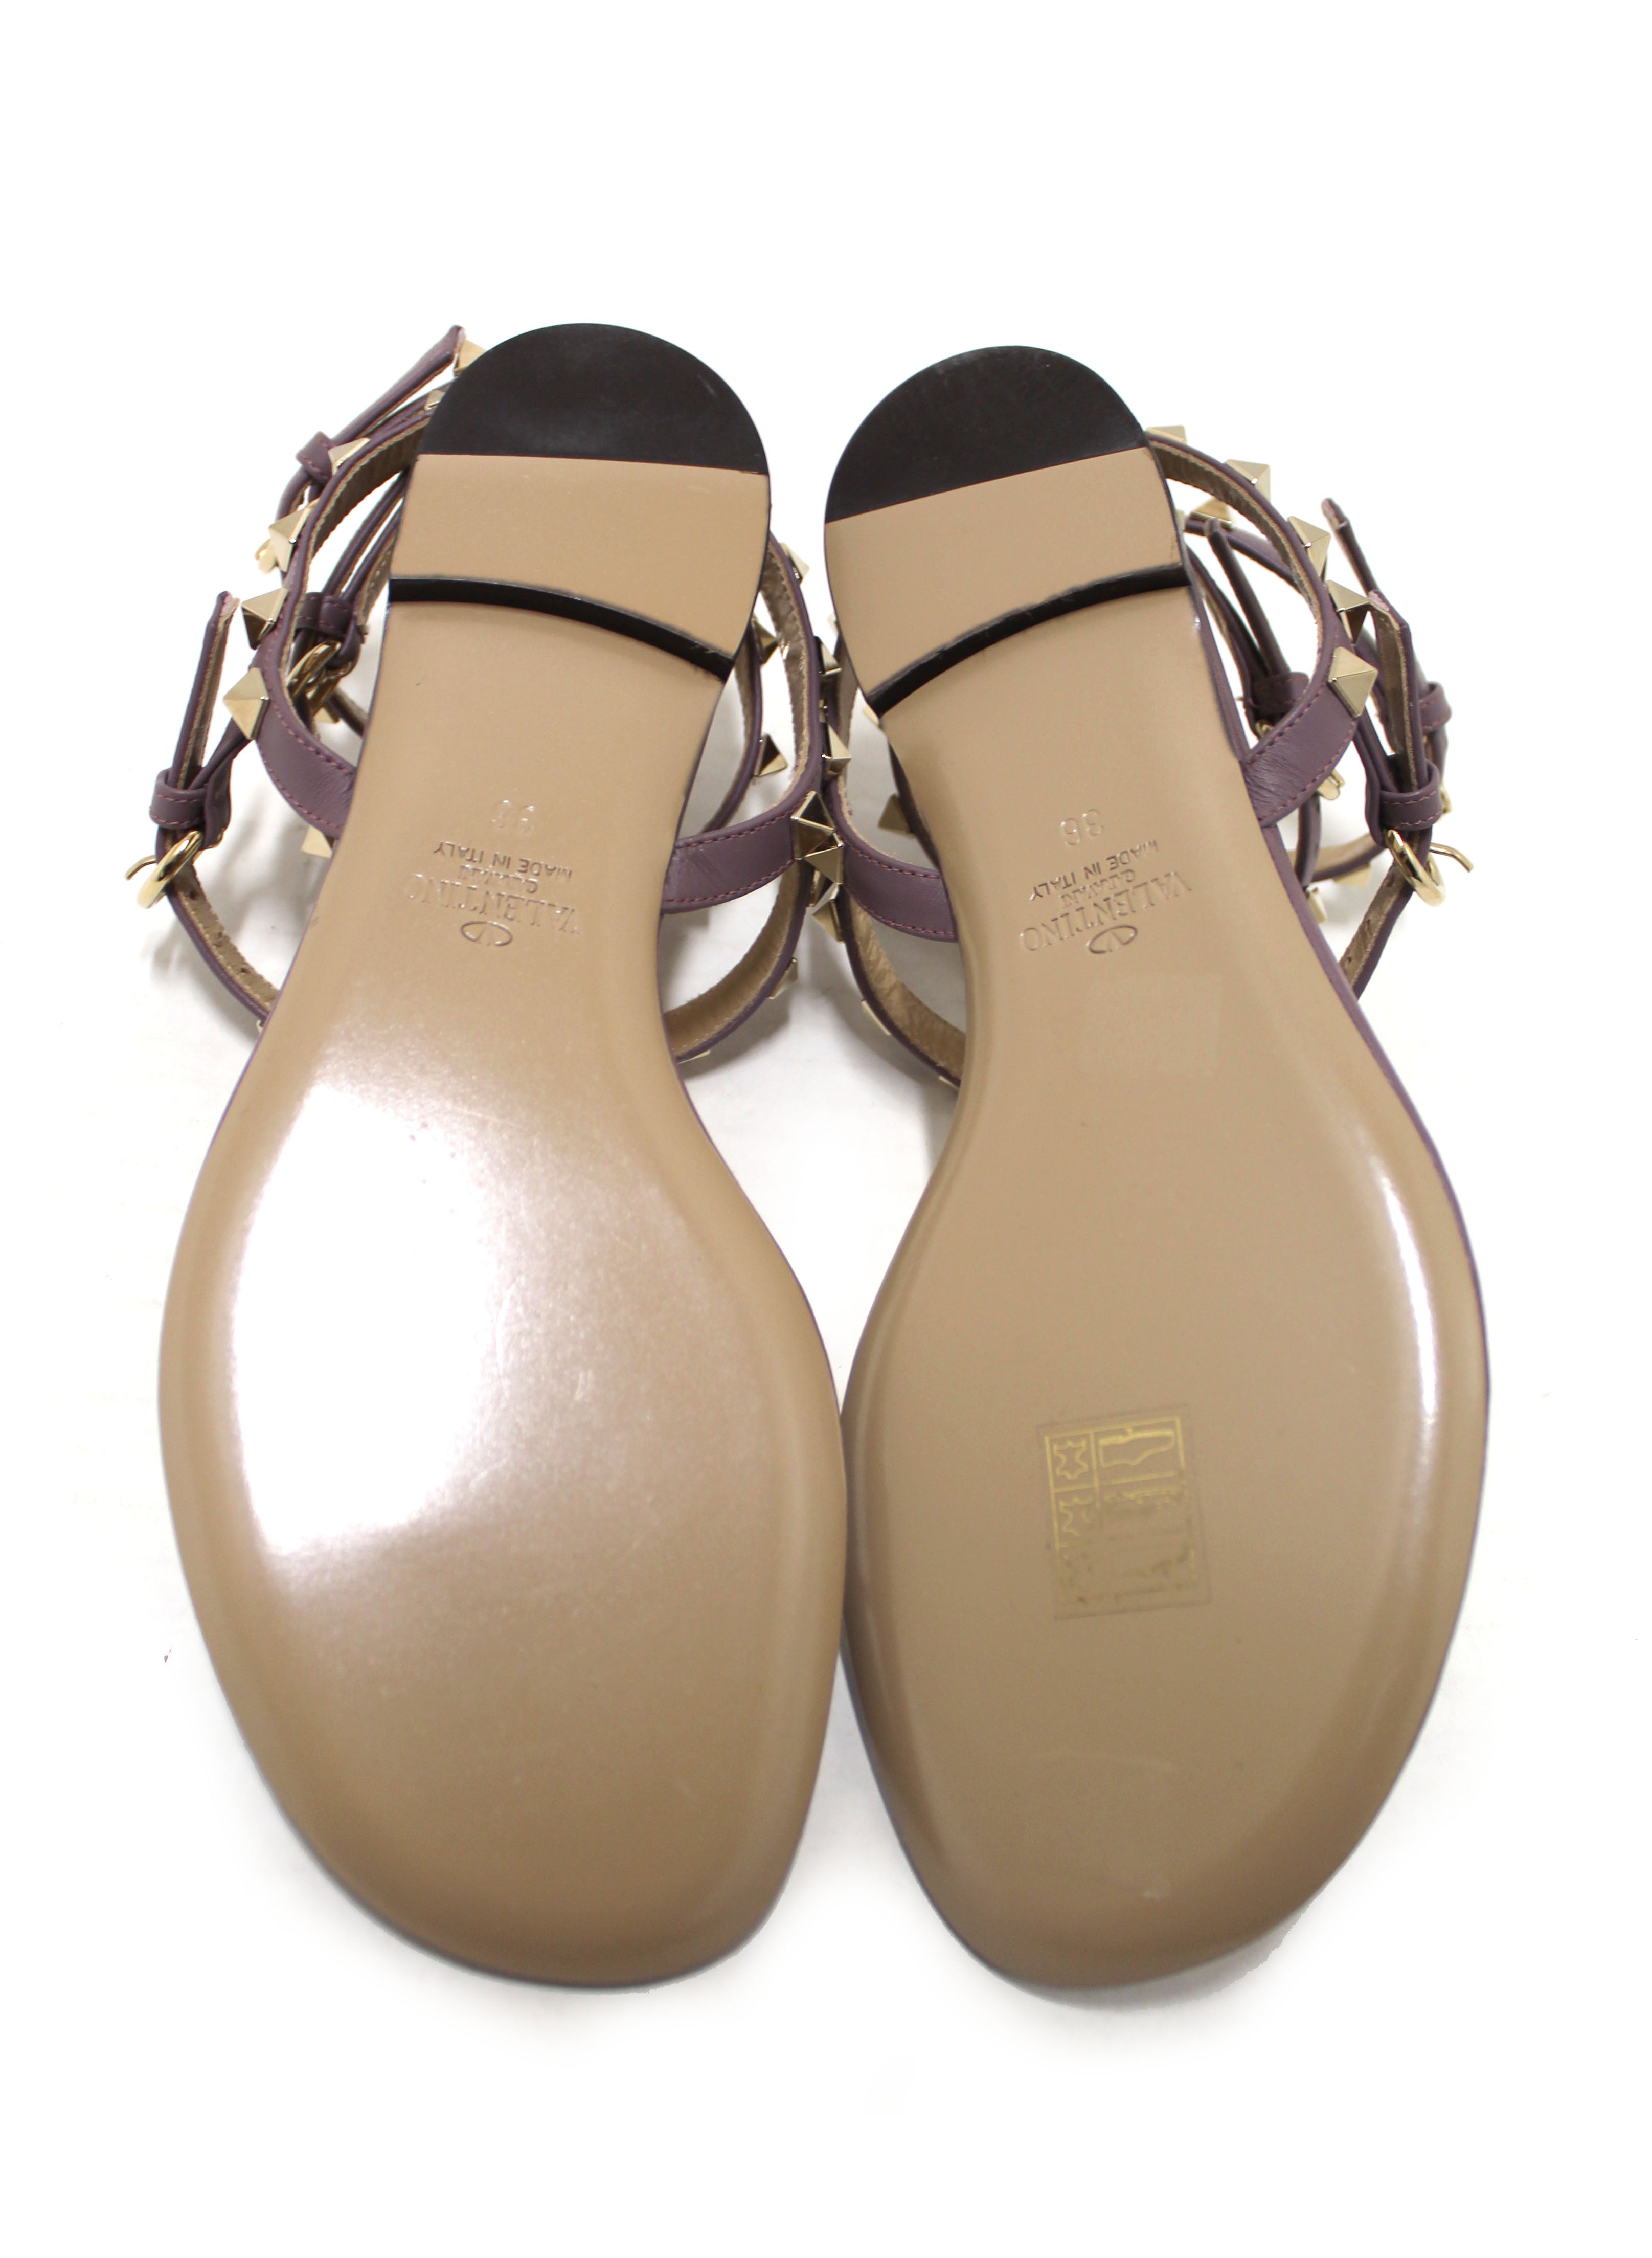 Authentic New Valentino Purple Leather Rockstud Flip Flop Sandal Shoes Size 36